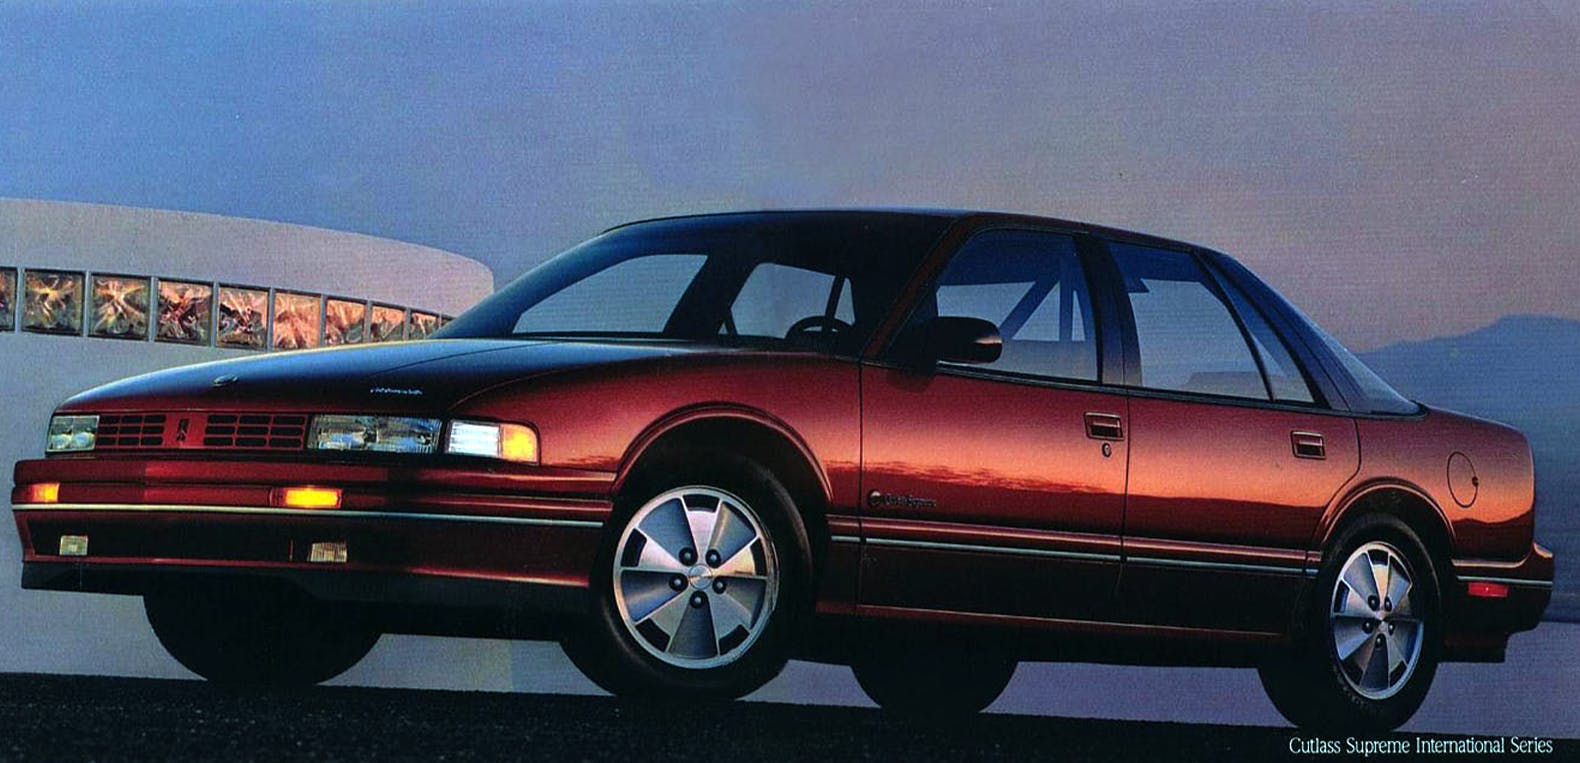 1991 Oldsmobile Cutlass Supreme International Series front three quarter